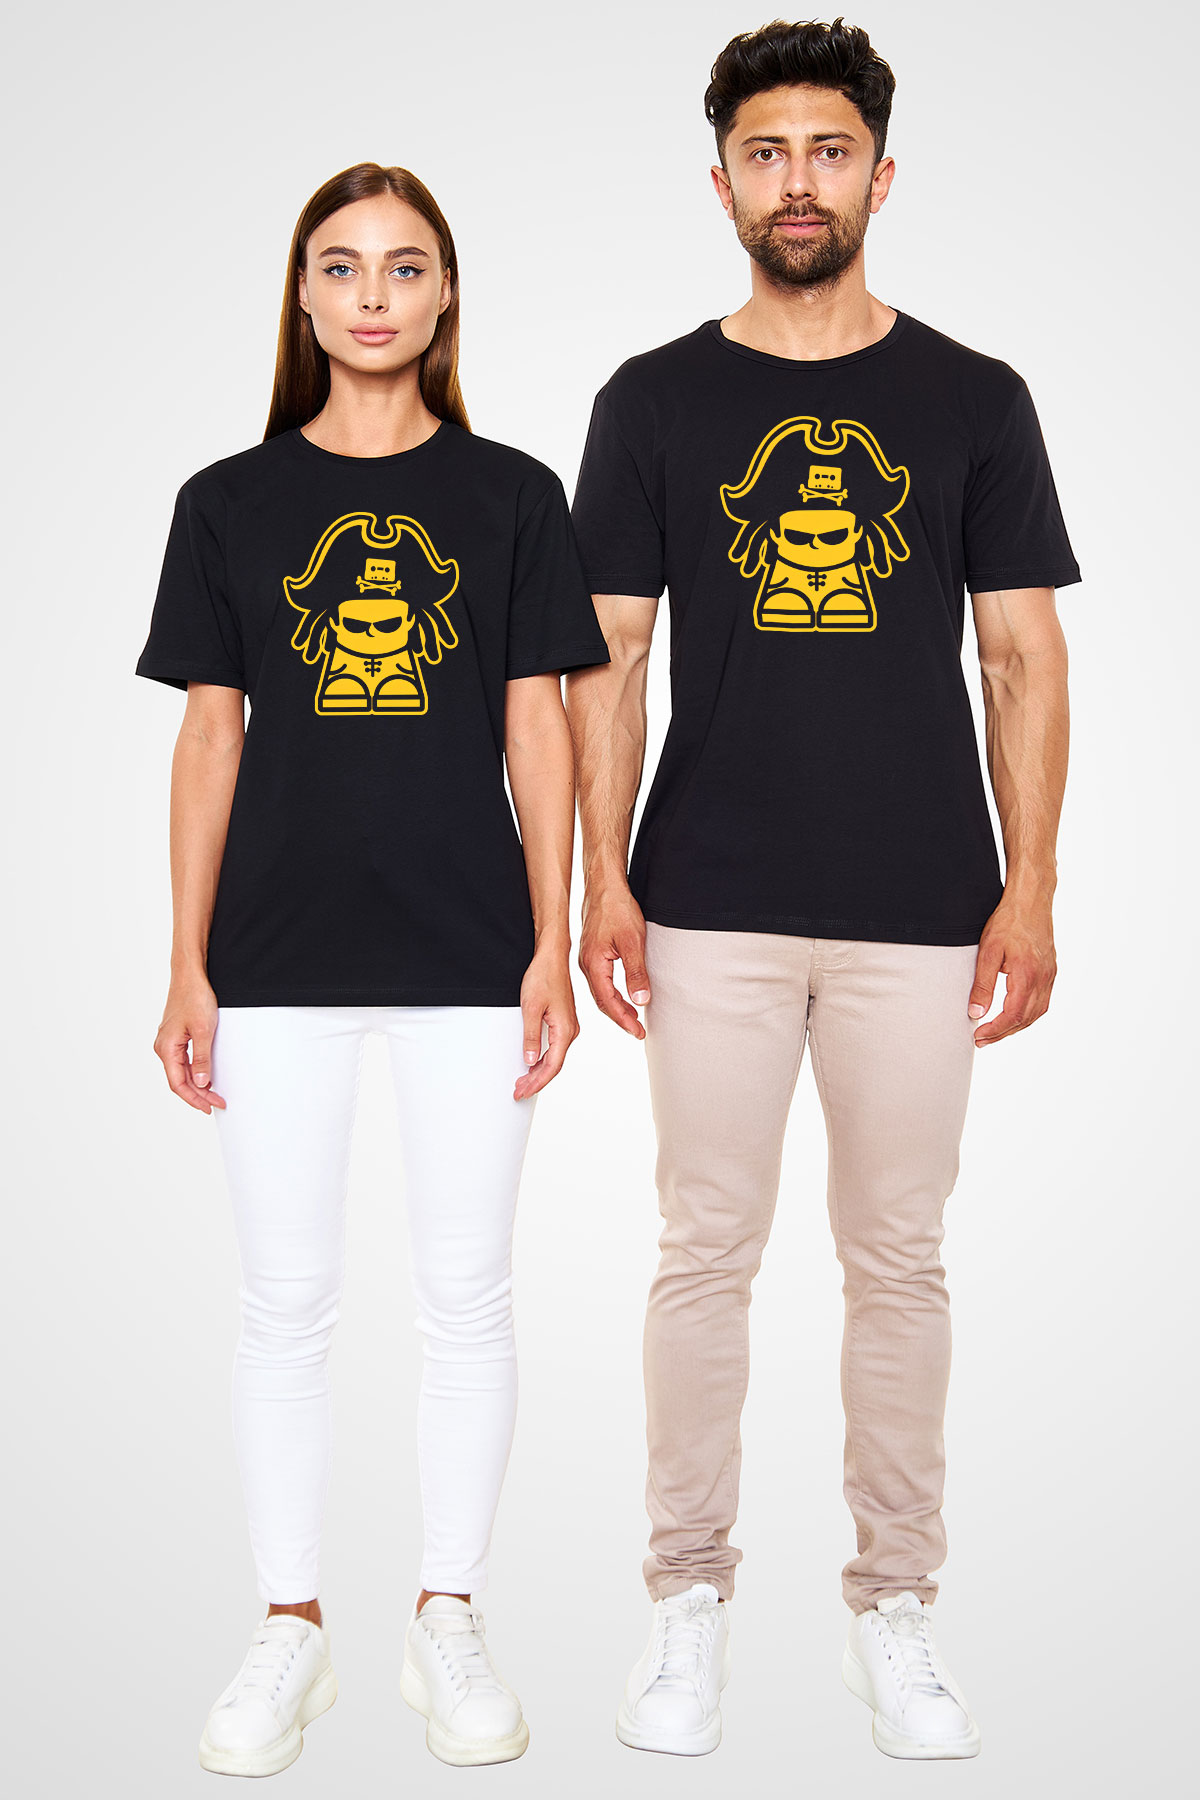 Dubioza kolektiv Black Unisex T-Shirt - Tees - Shirts